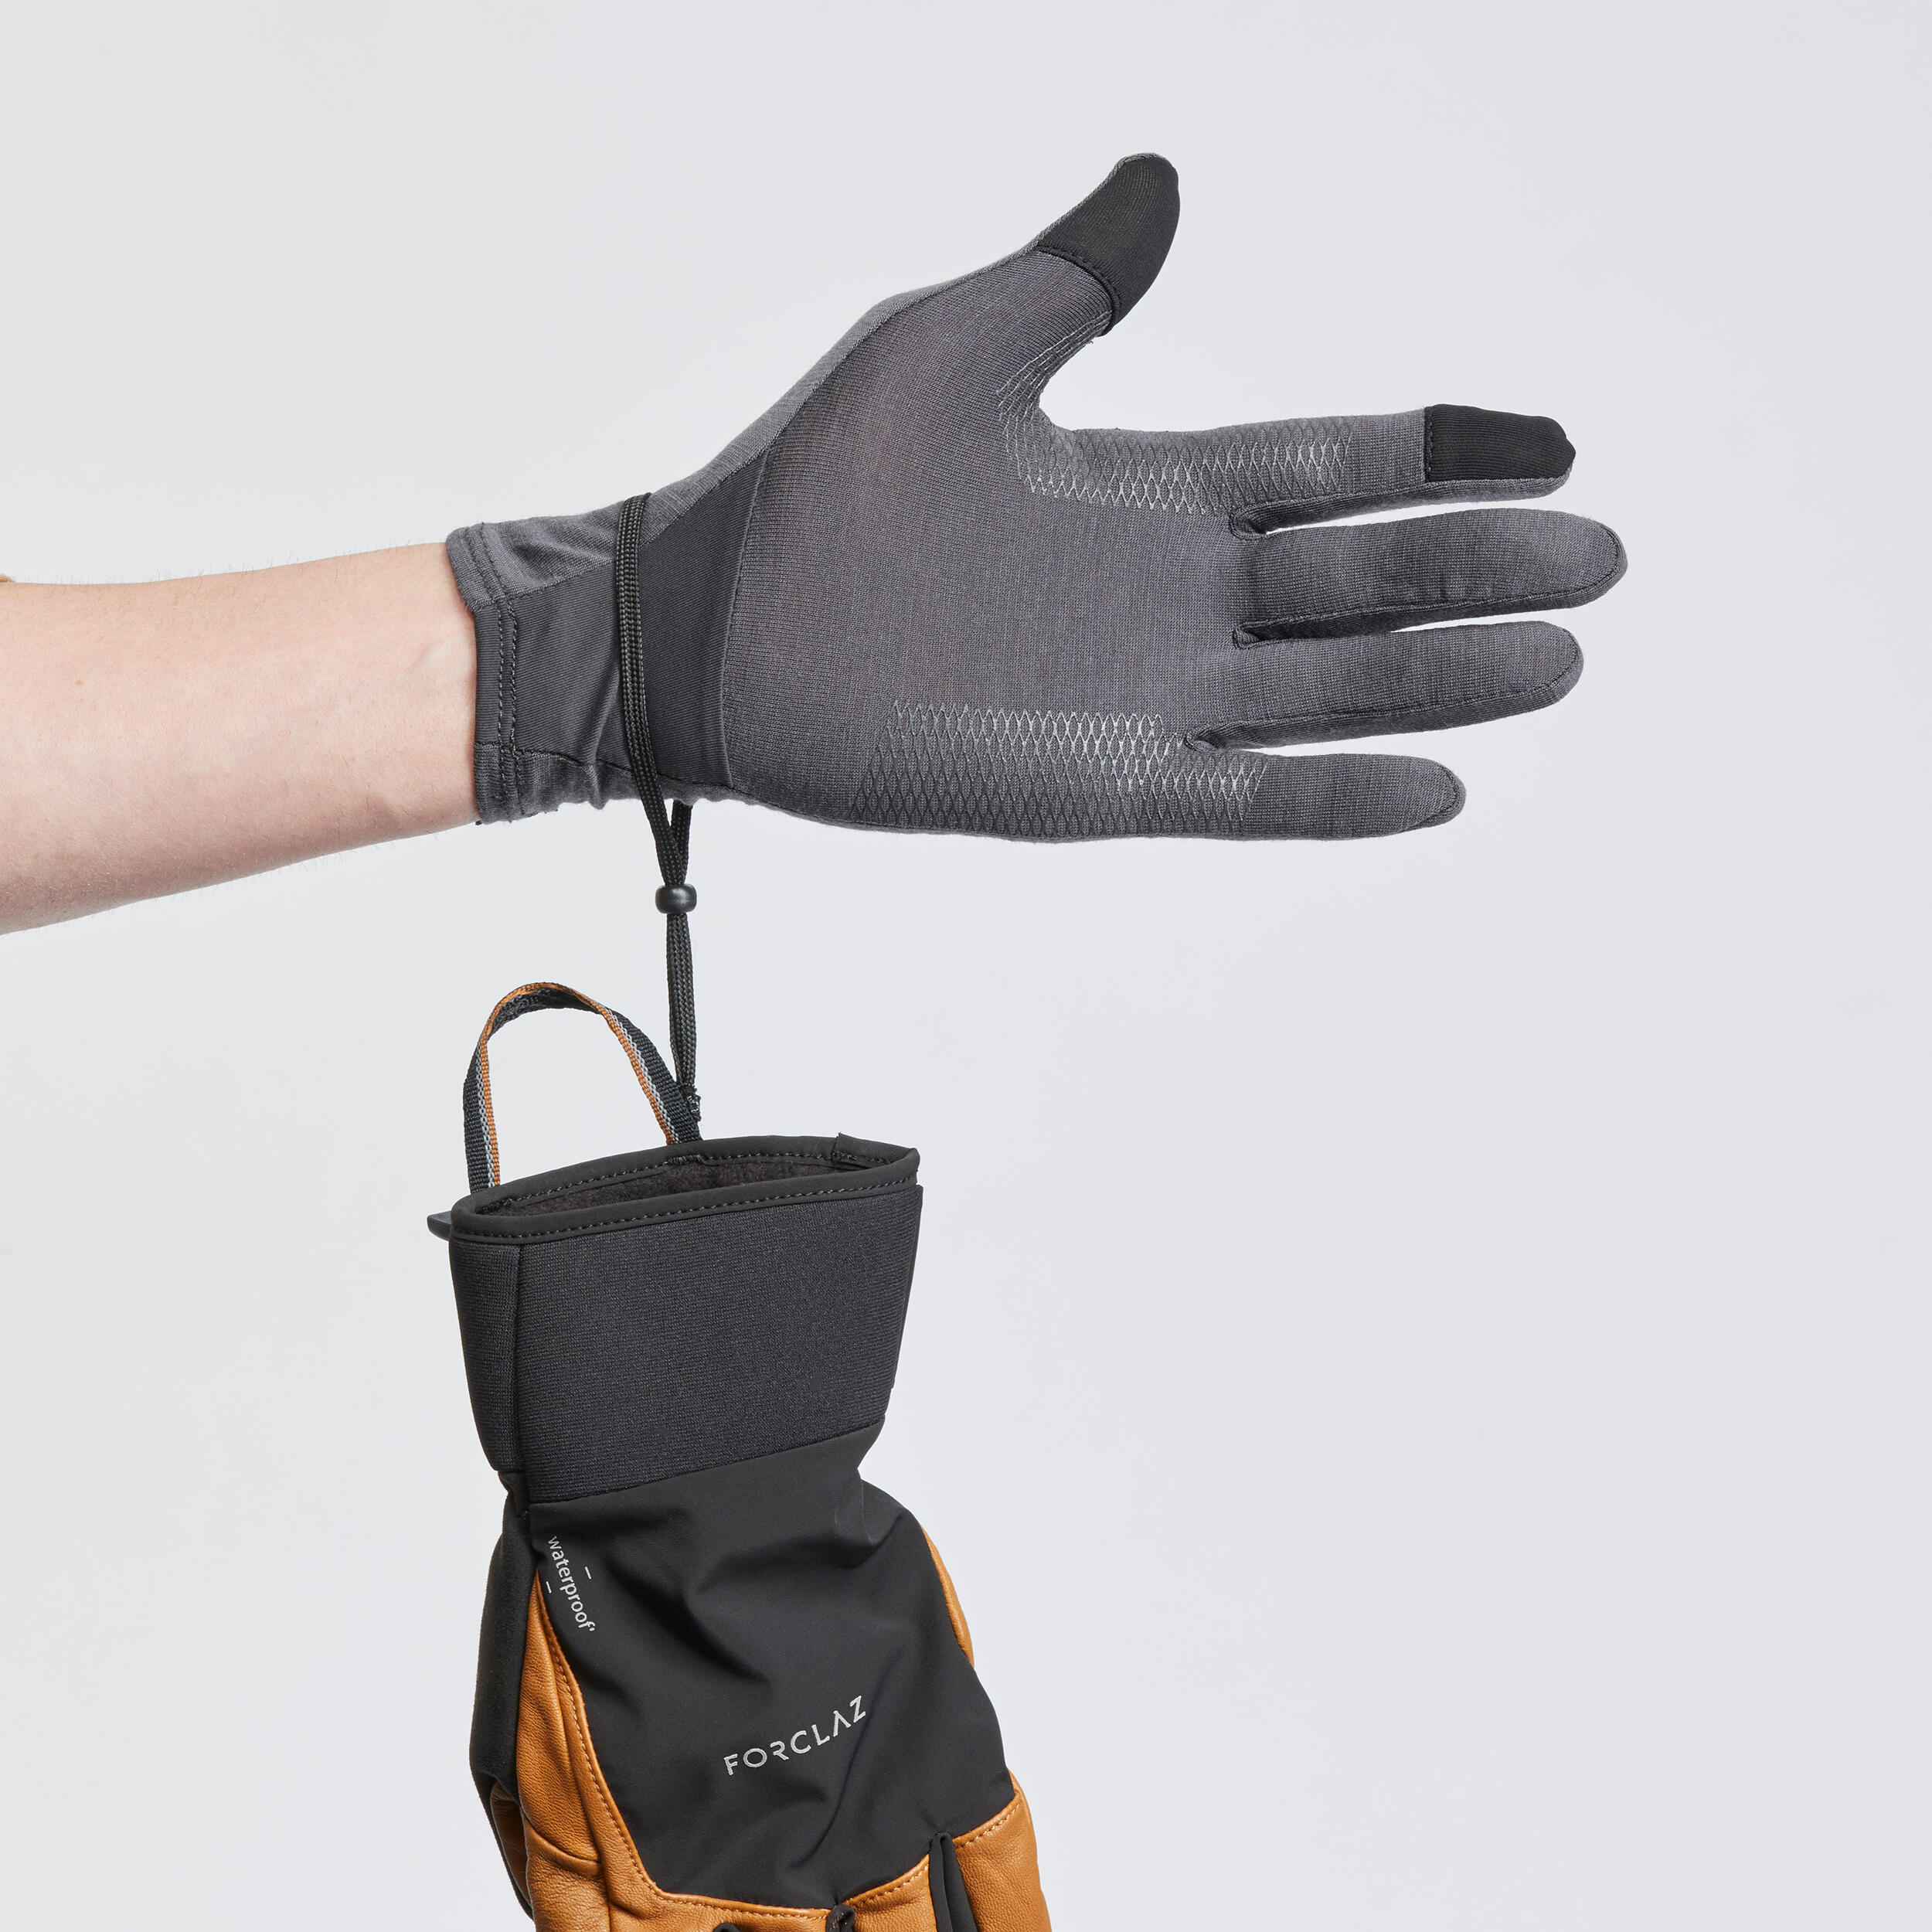 Merino Wool Hiking Liner Gloves - MT 500 Grey - FORCLAZ